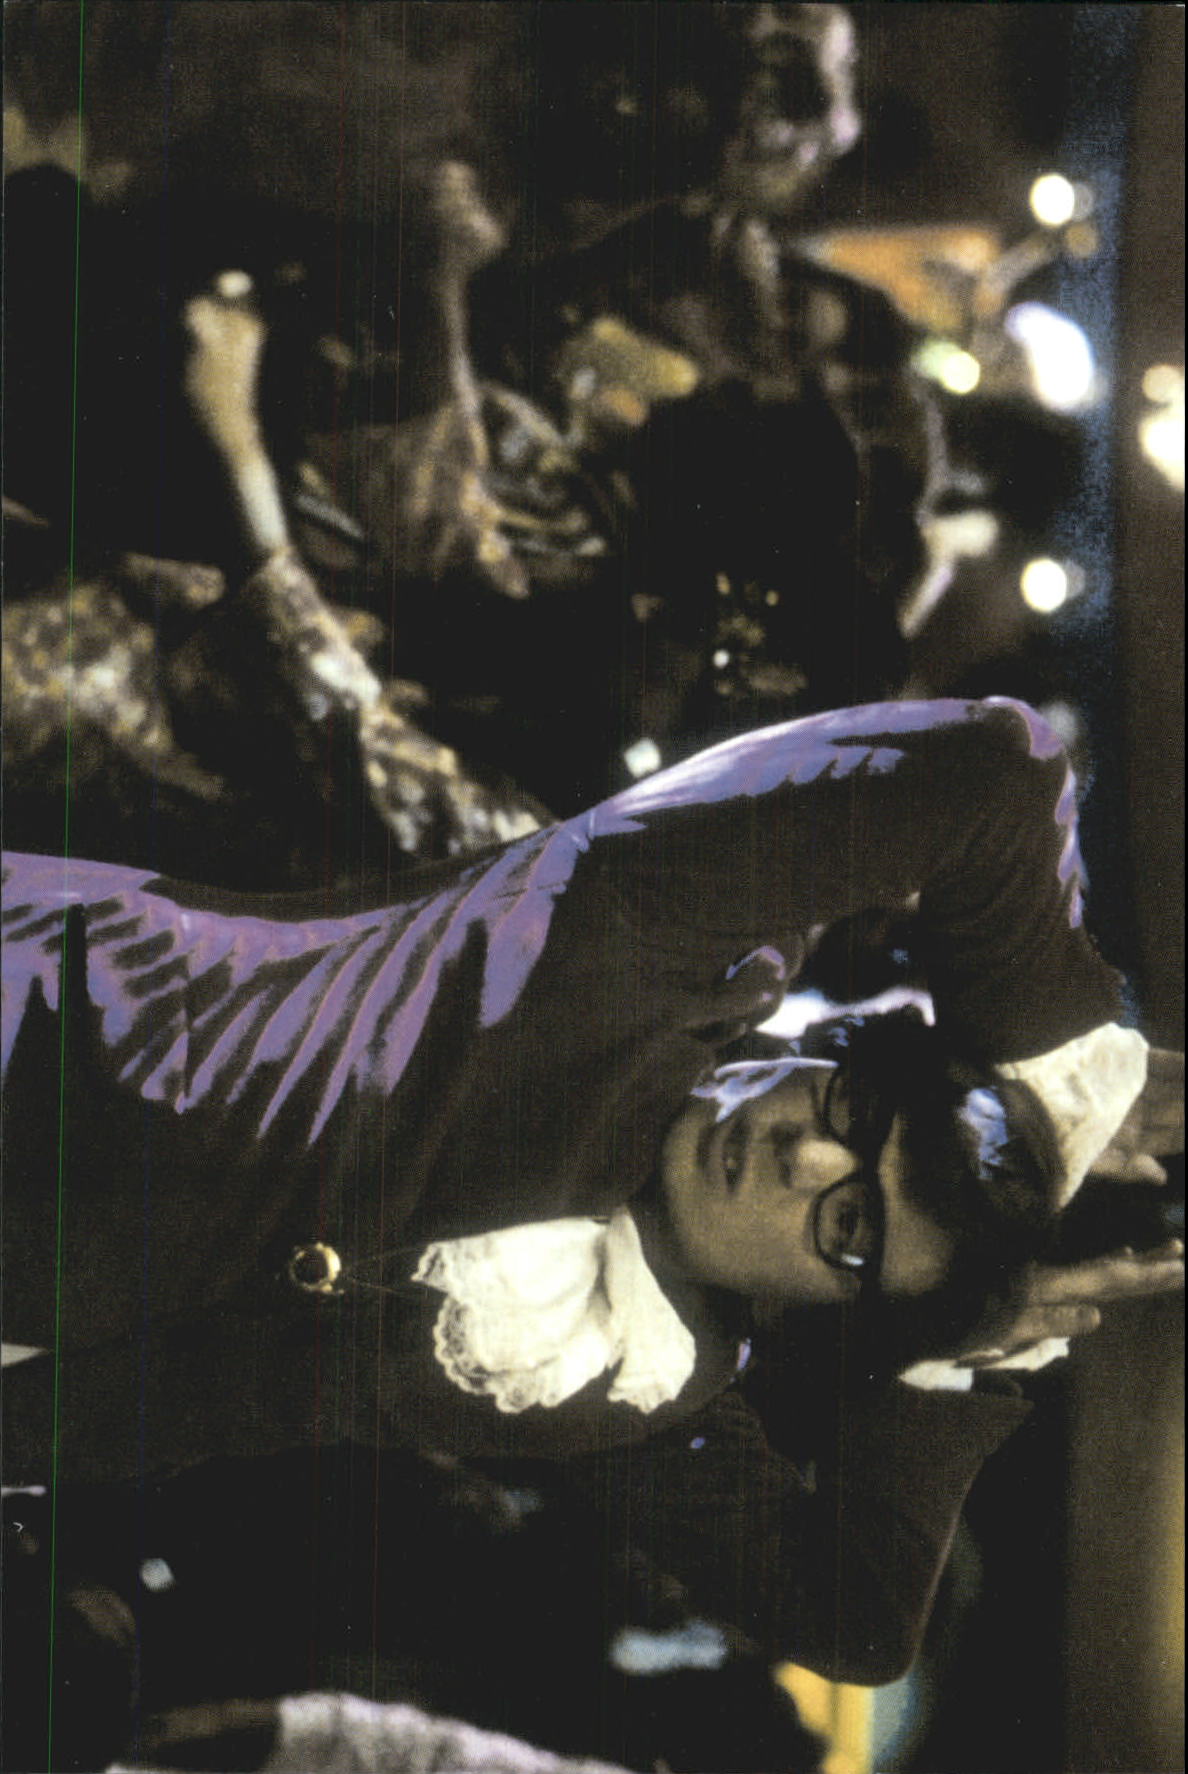 1999 Panini Austin Powers Photocards #10 Austin in purple dances